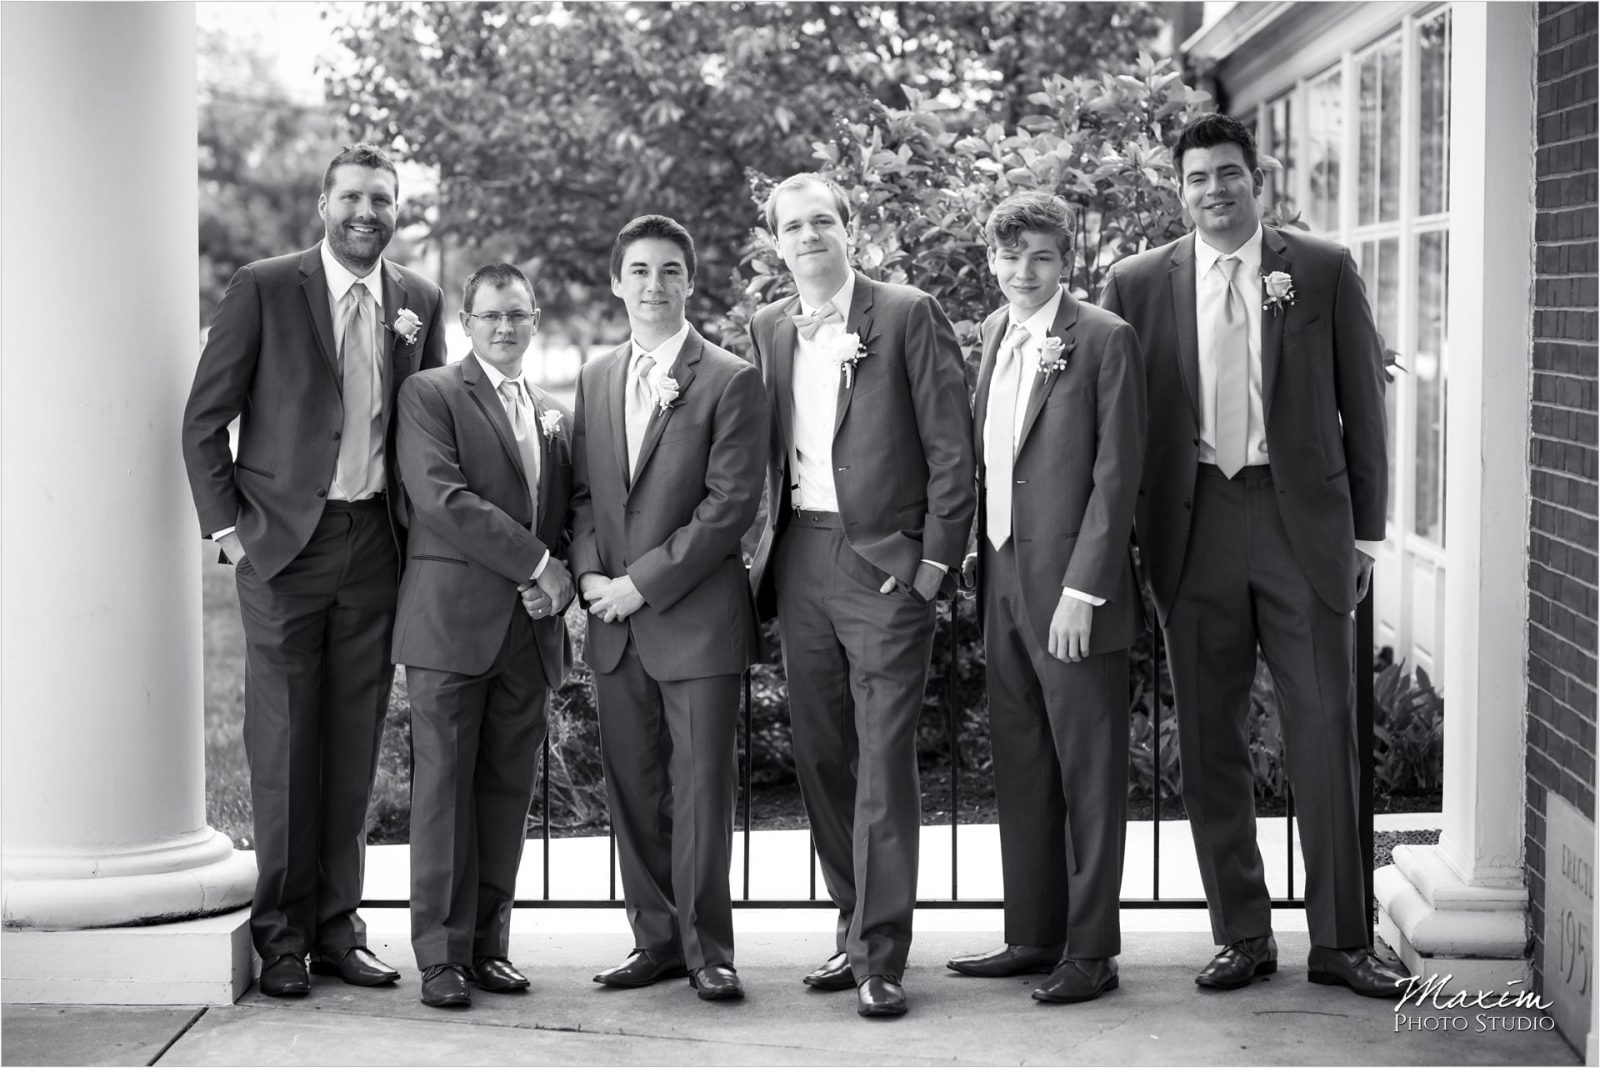 Anderson Hills UMC Cincinnati Wedding, Groom, groomsmen